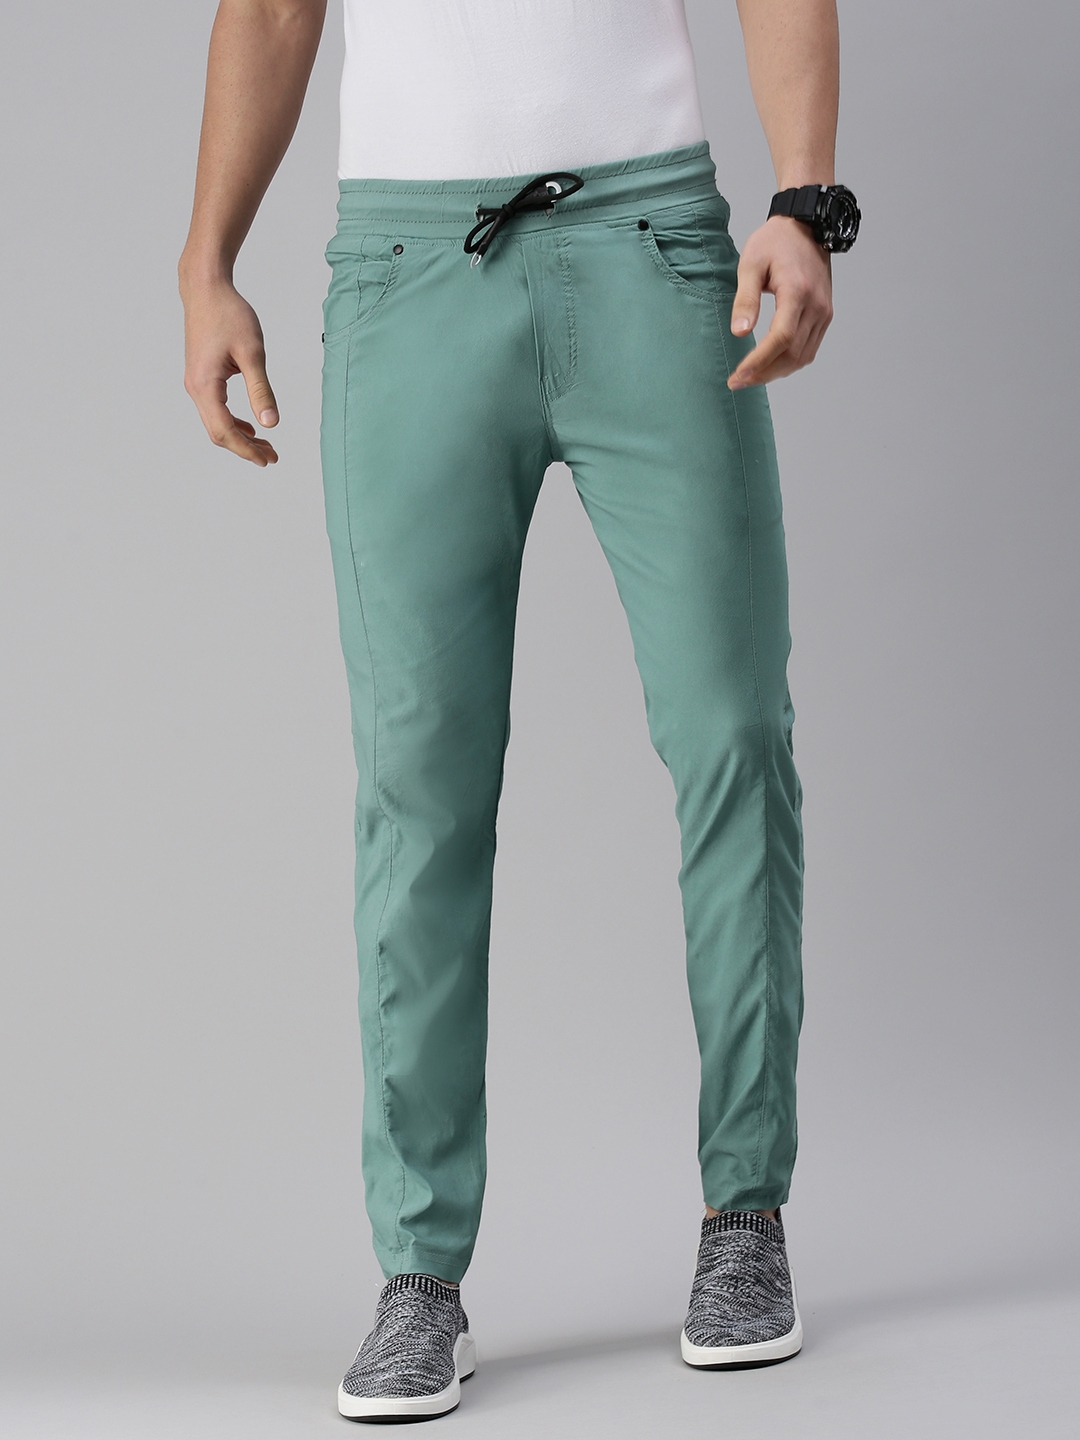 Showoff | SHOWOFF Men's Solid Cotton Sea green Regular Fit Track Pants